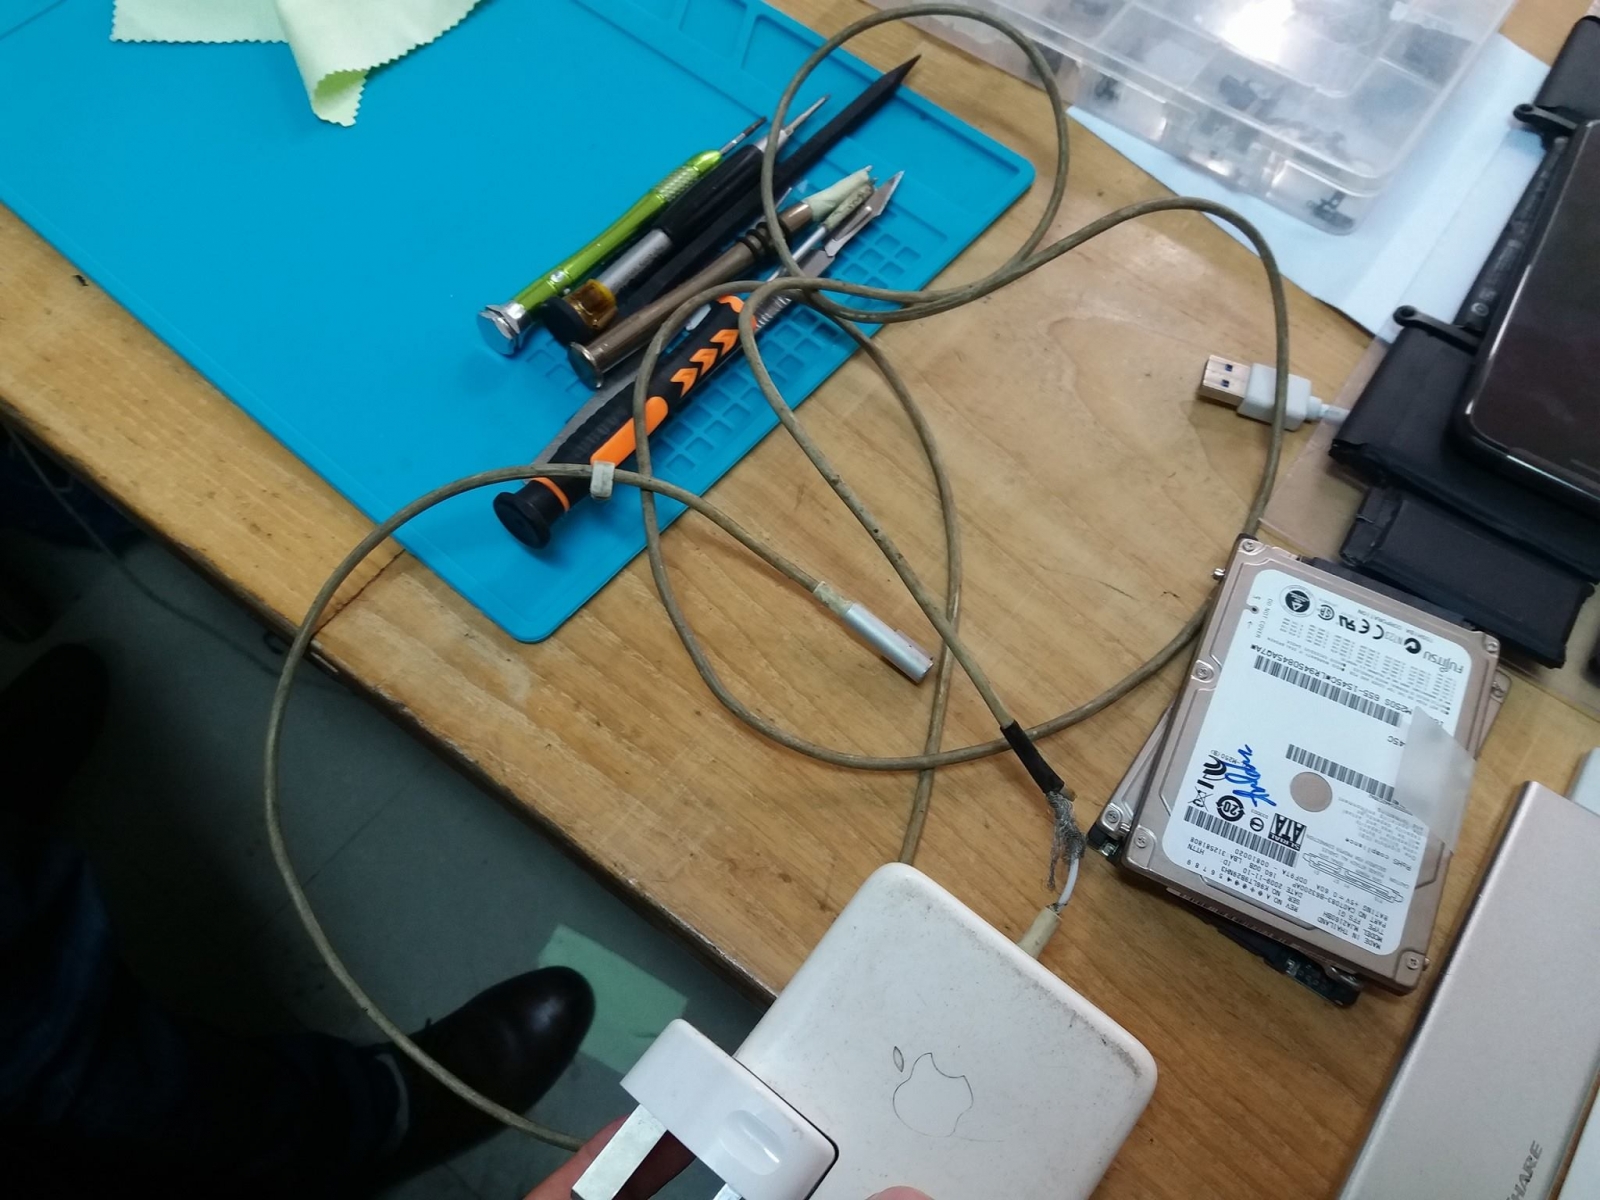 Thay dây sạc macbook in đà nẵng - Fix charger , repair charger in da nẵng